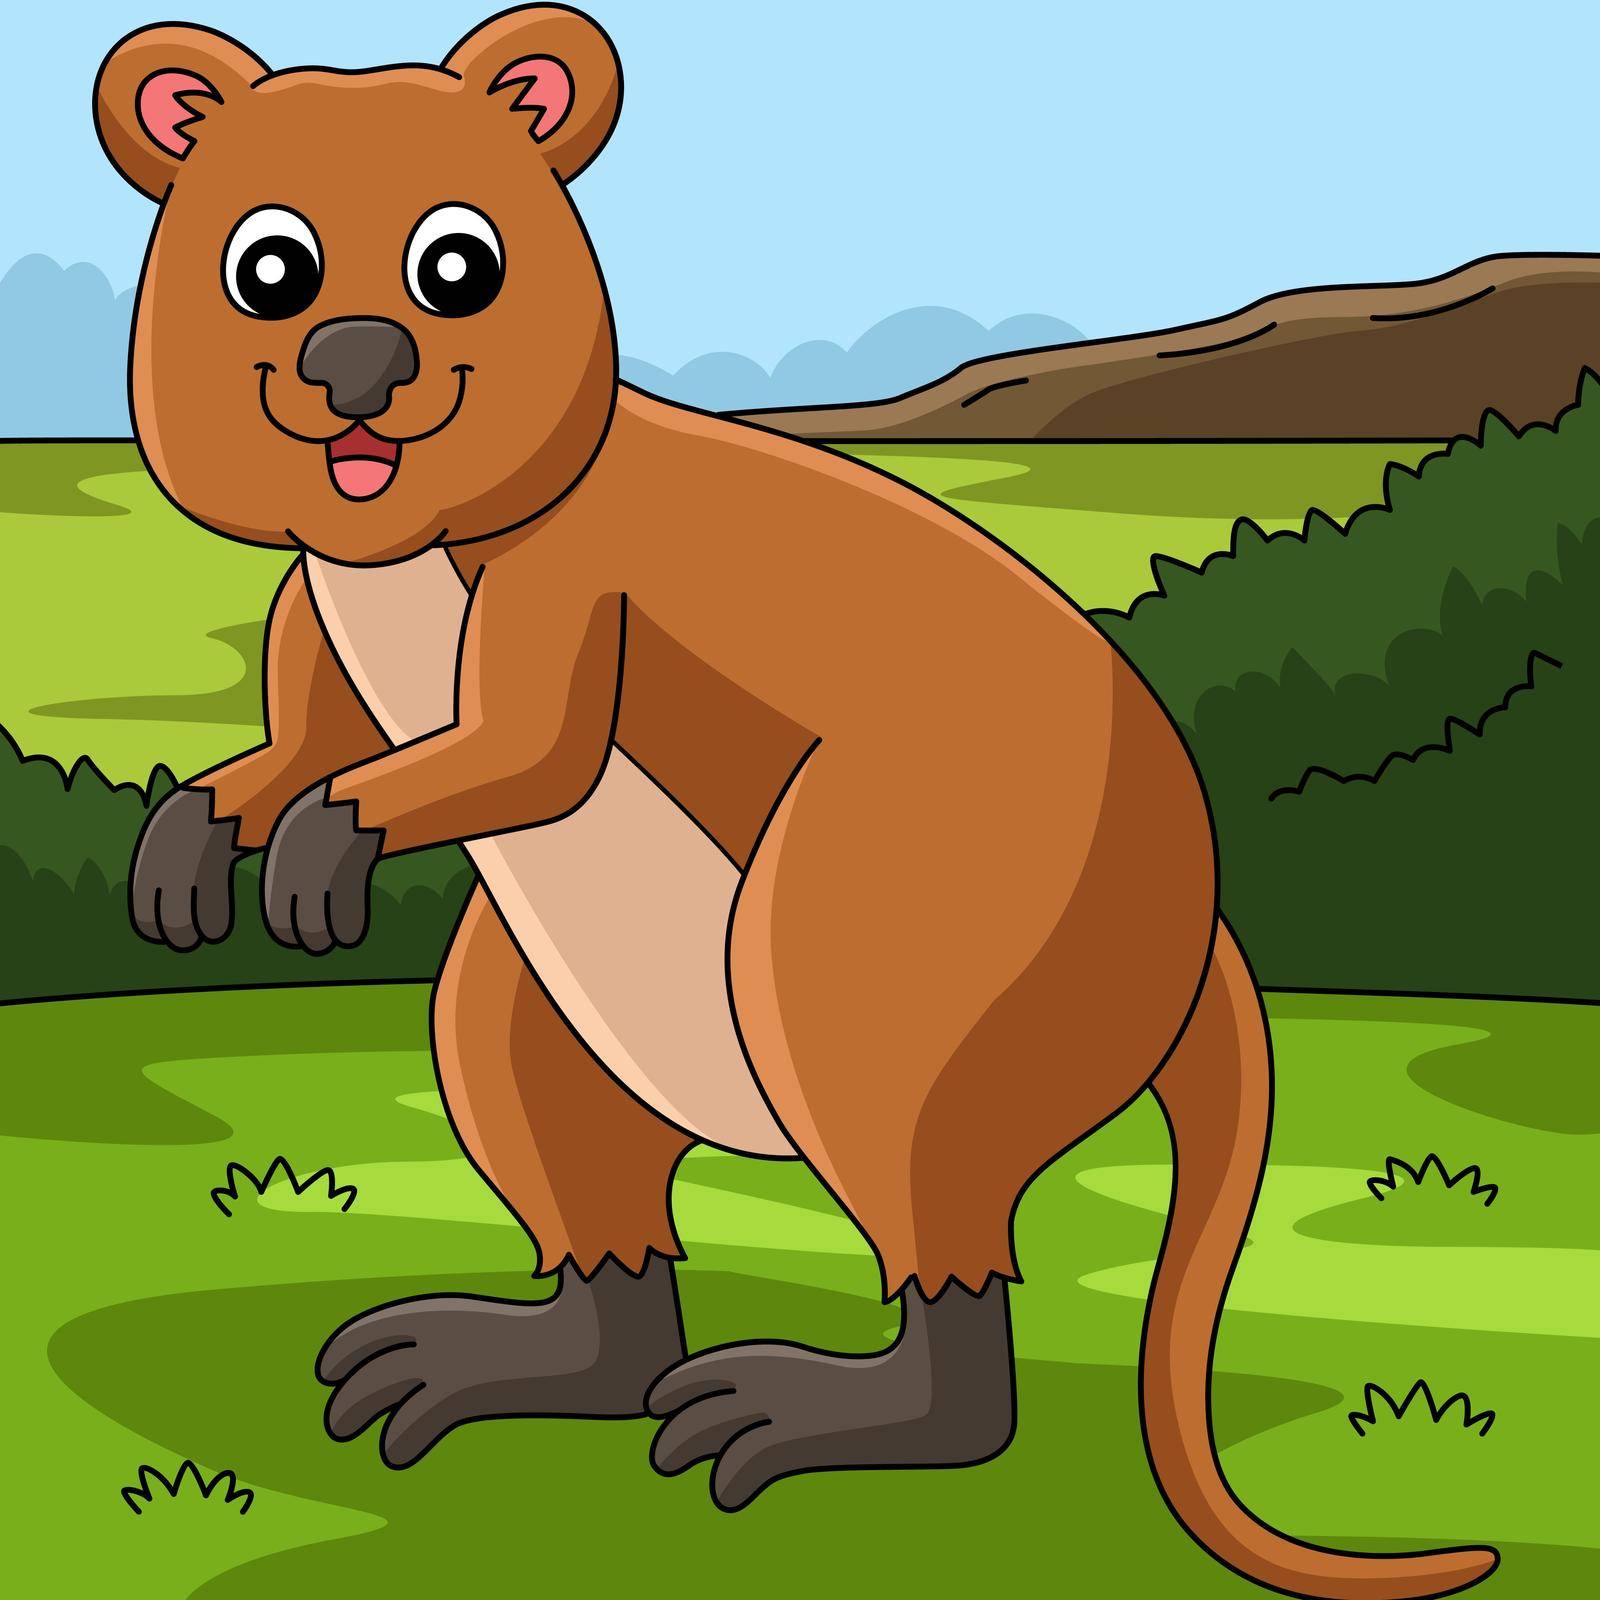 This cartoon illustration shows a quokka animal illustration.